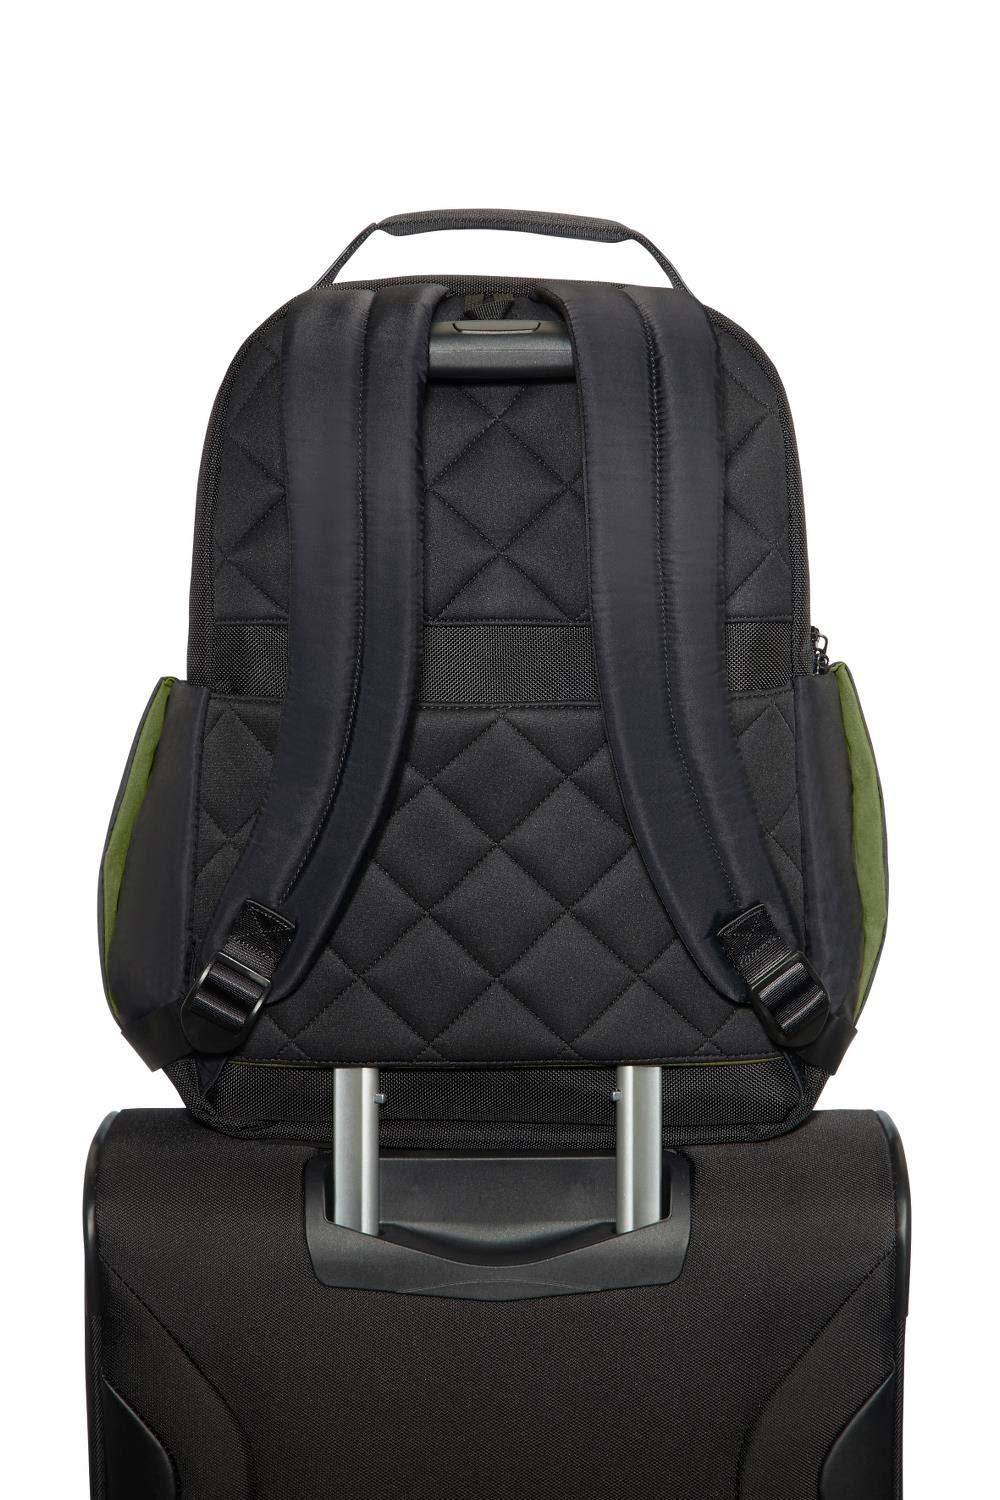 Samsonite Pro‐DLX Travel Gray Bag Backpack w/ Leather Bottom | eBay